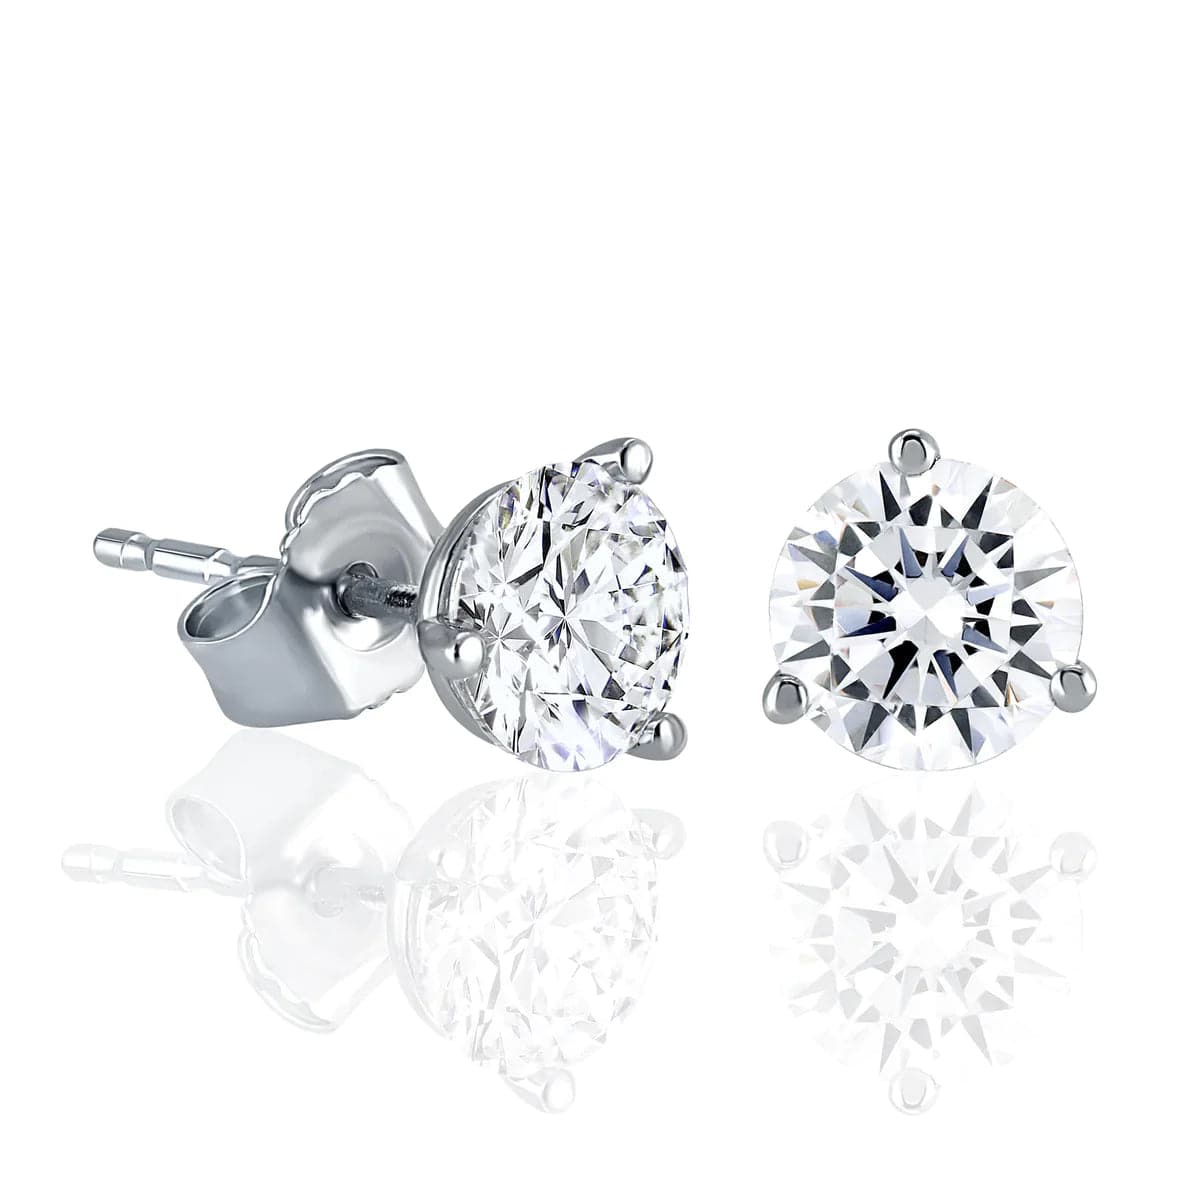 Fire & Ice Ideal Cut Natural Diamond Stud Earrings